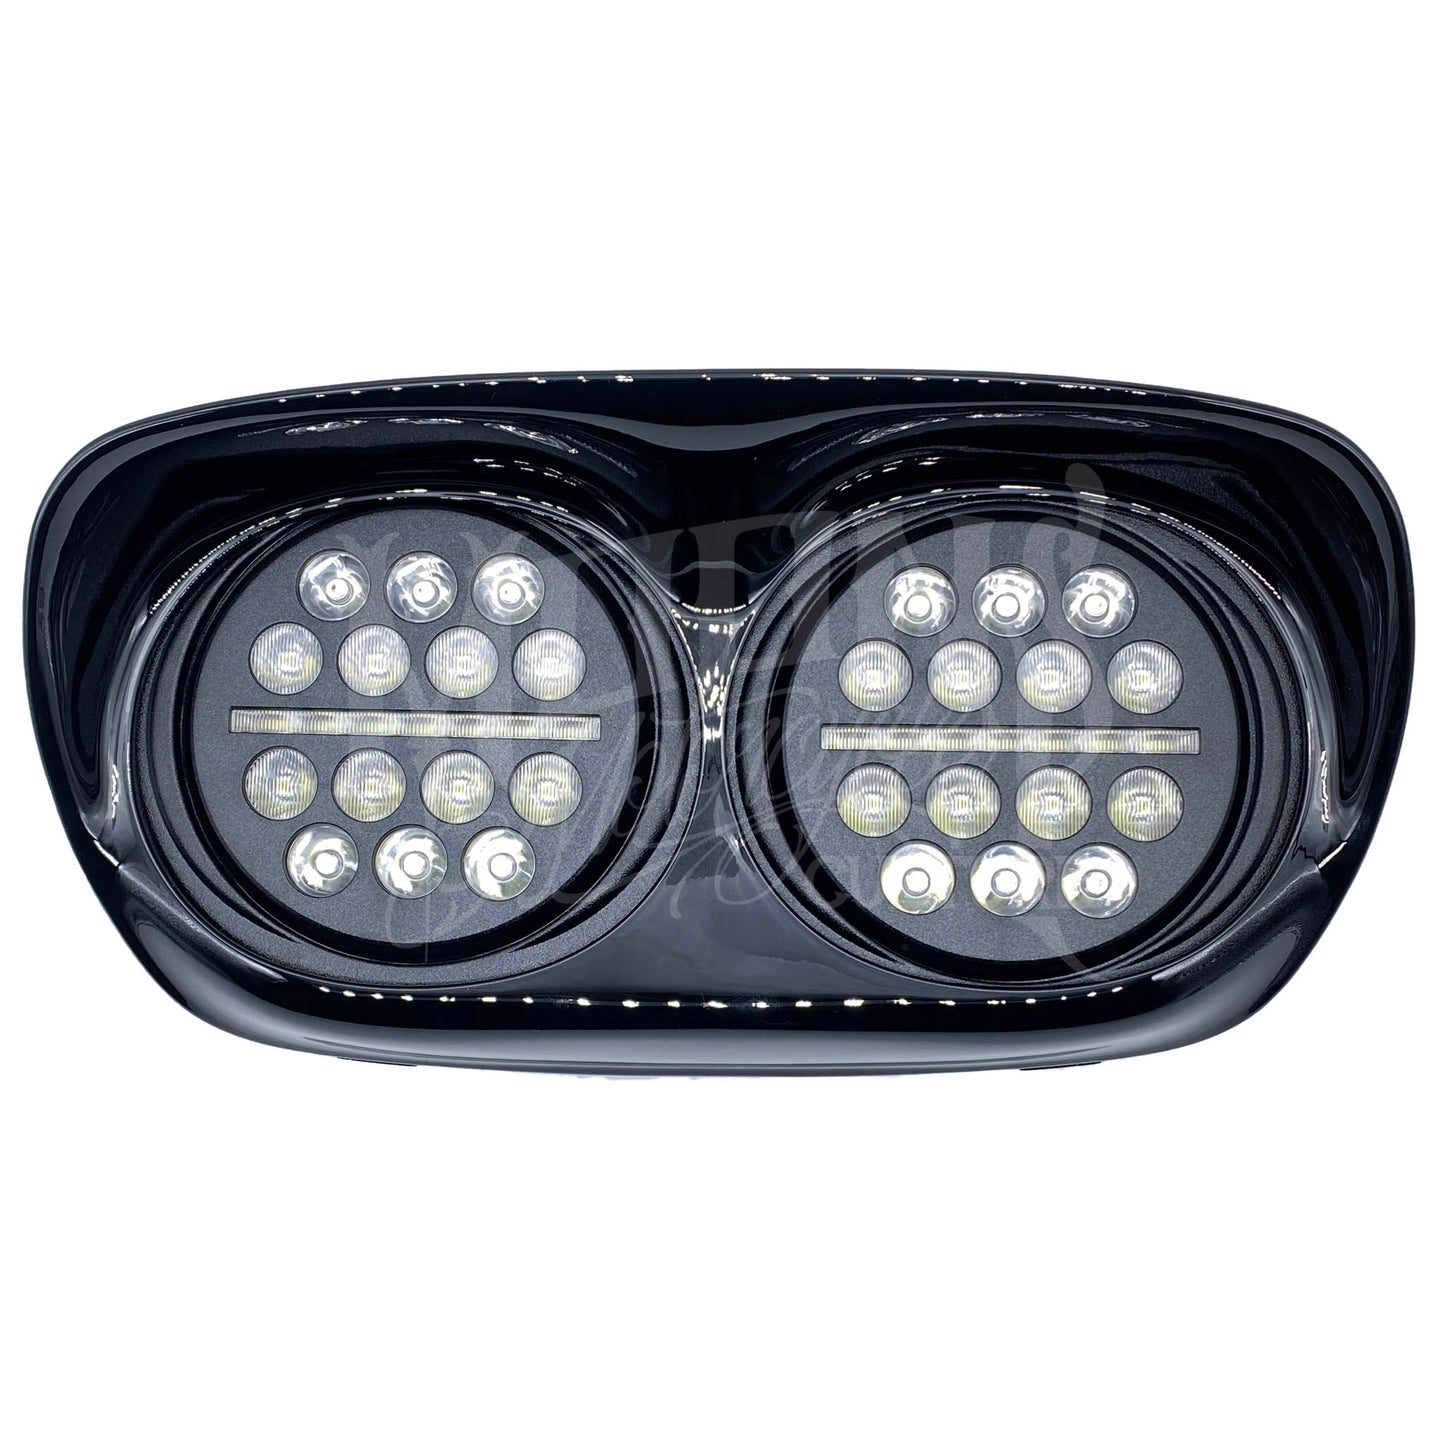 MOONSMC® Road Glide 2002-2013 Dual Fly Eye LED Headlight